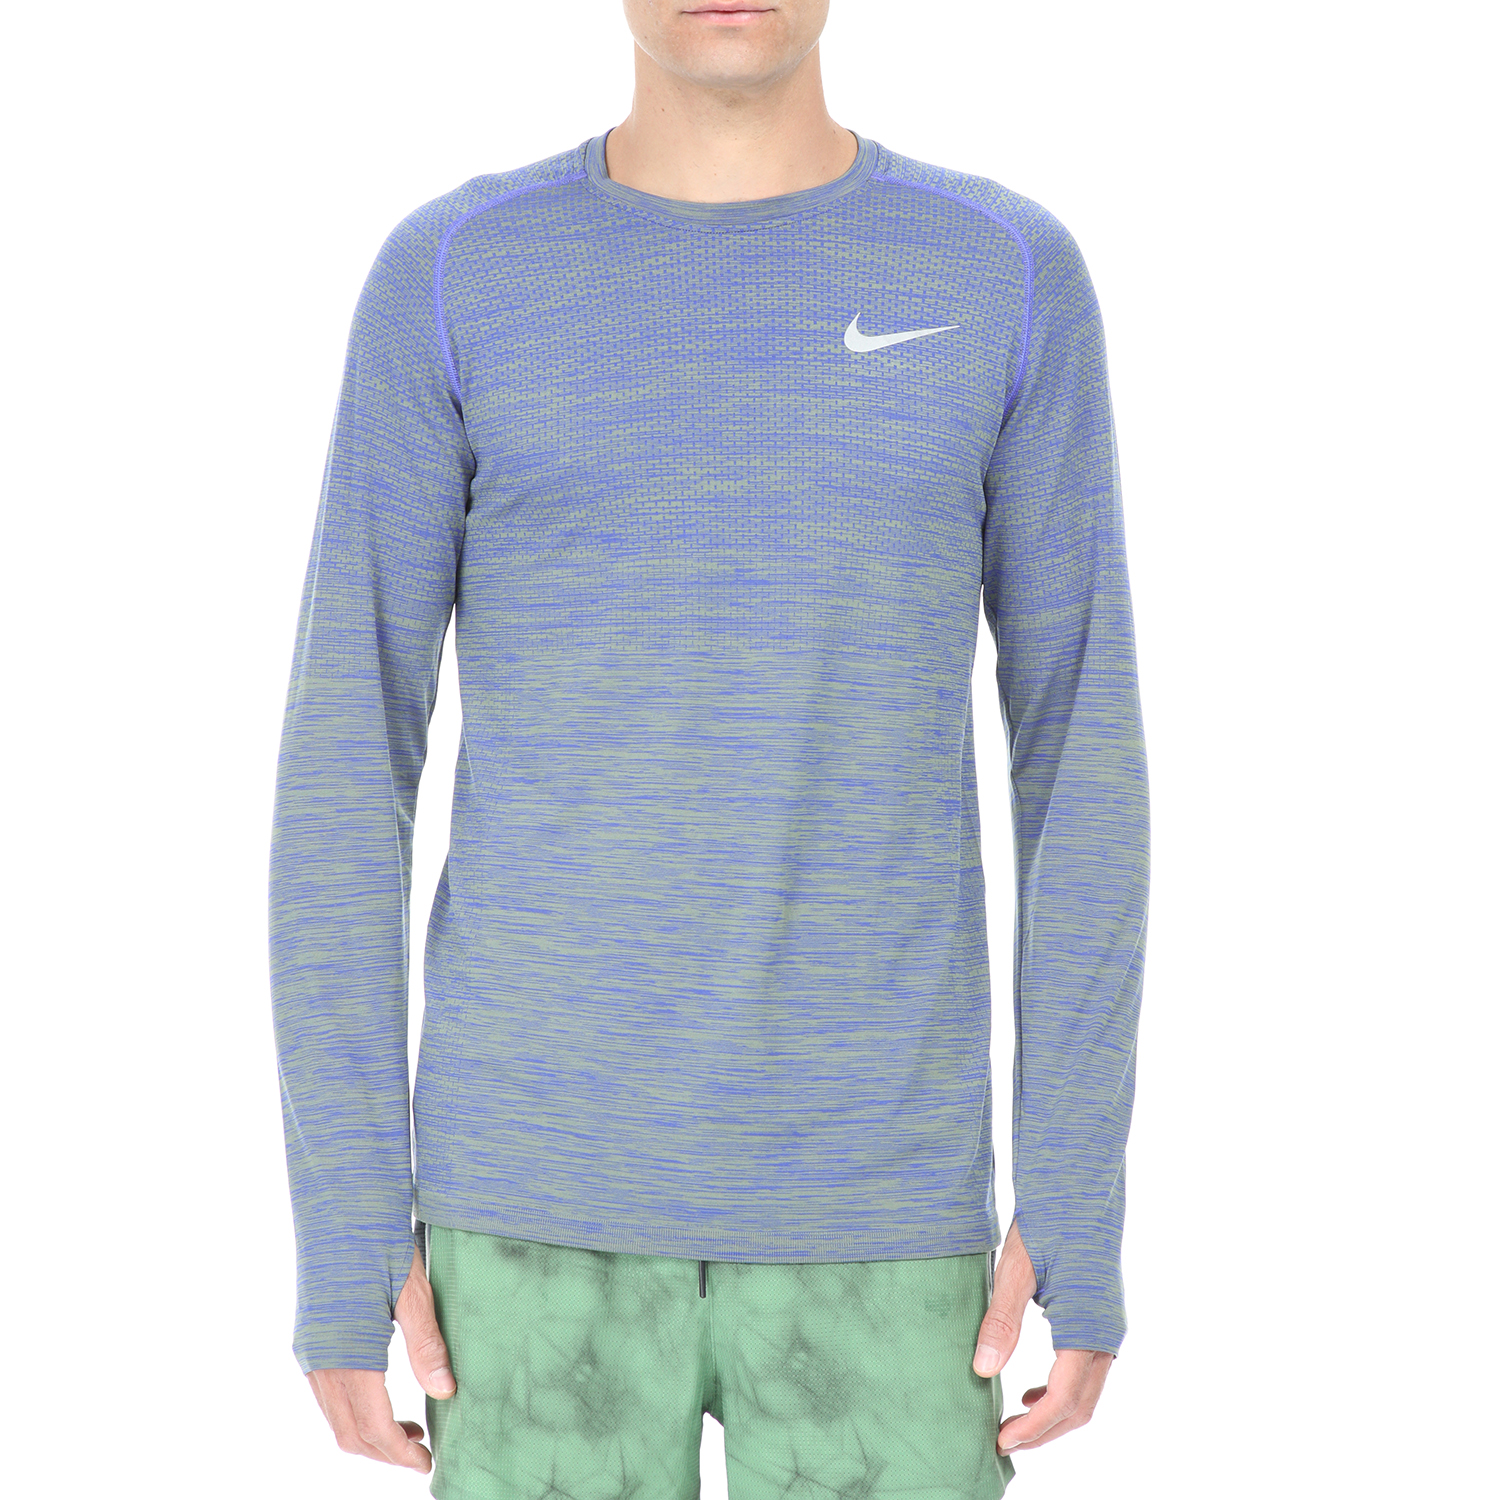 NIKE - Ανδρική μακρυμάνικη μπλούζα Nike DF KNIT γαλάζια Ανδρικά/Ρούχα/Αθλητικά/Φούτερ-Μακρυμάνικα